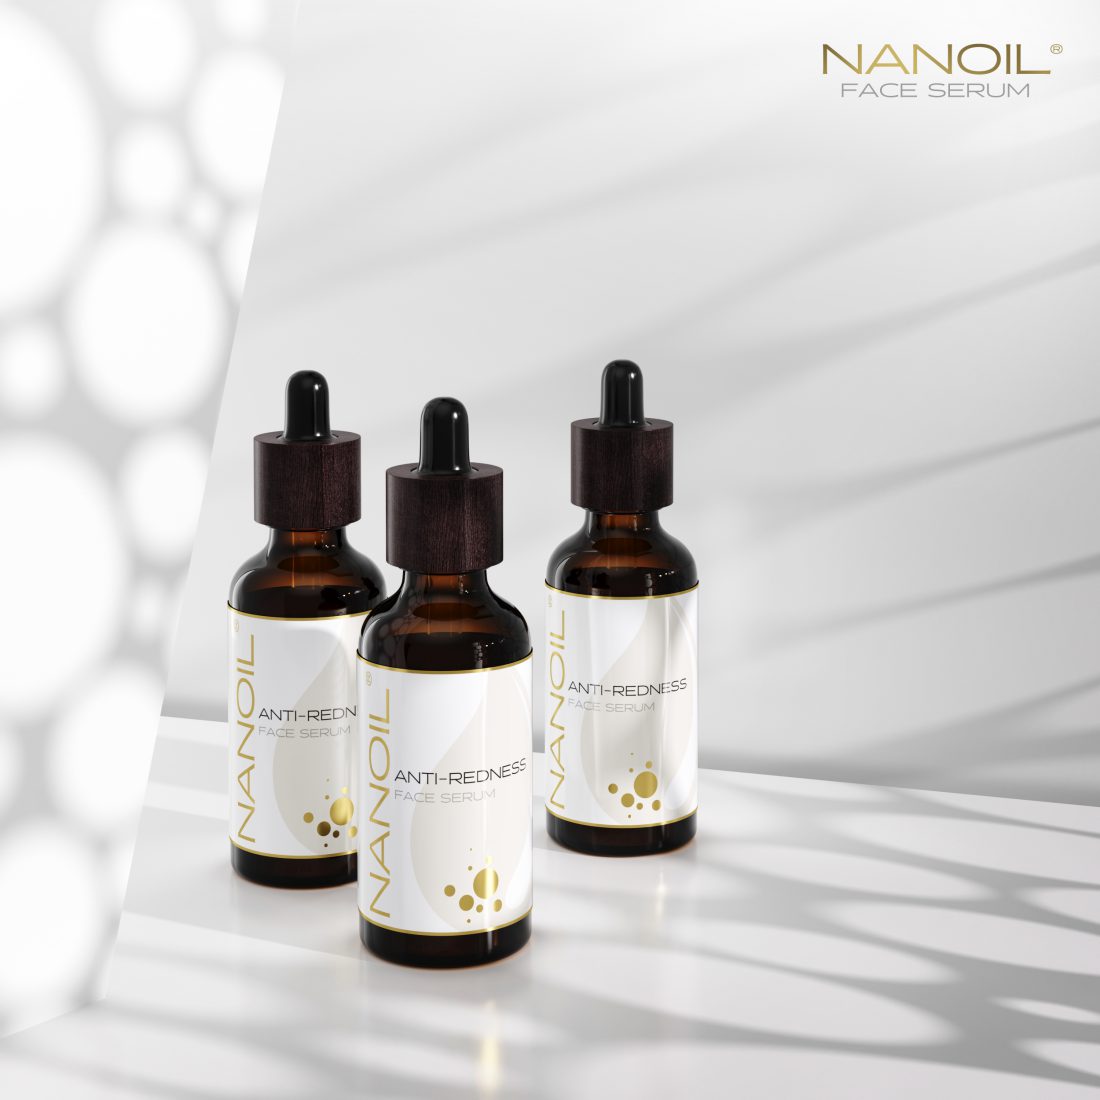 Nanoil anti-redness face serum